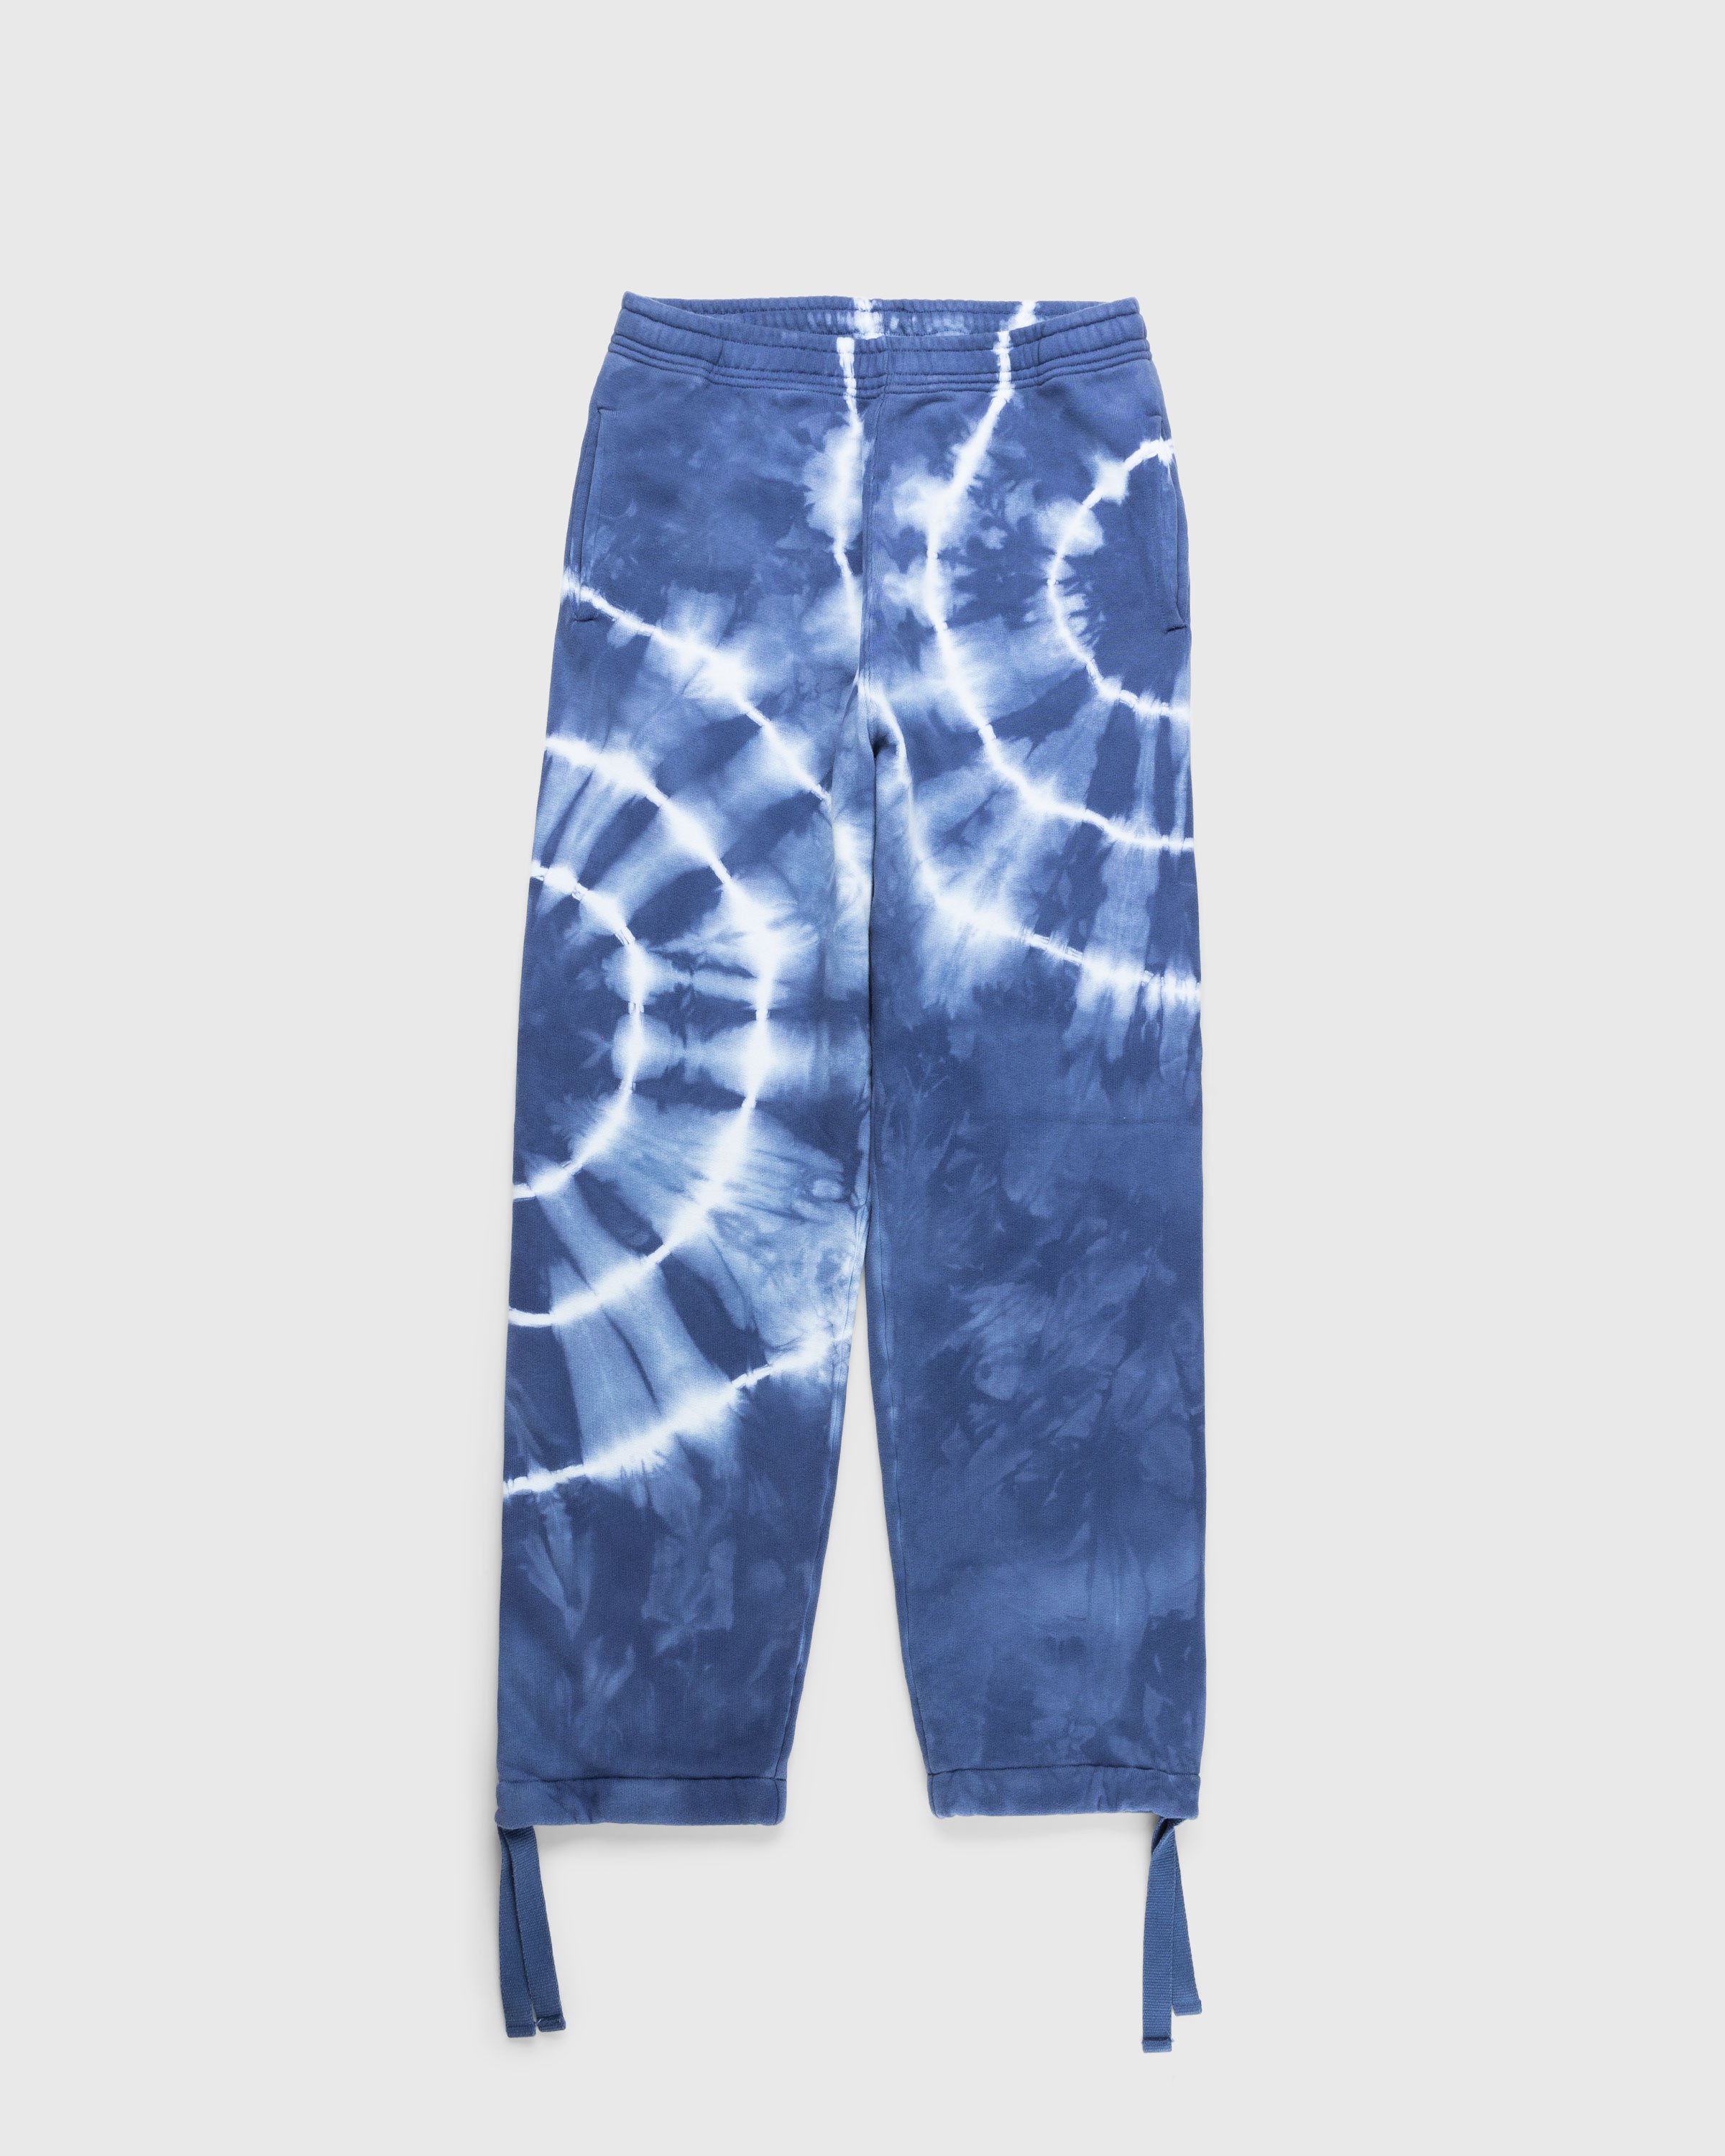 Stüssy x Dries van Noten - Tie Dye Pant - Clothing - Blue - Image 1